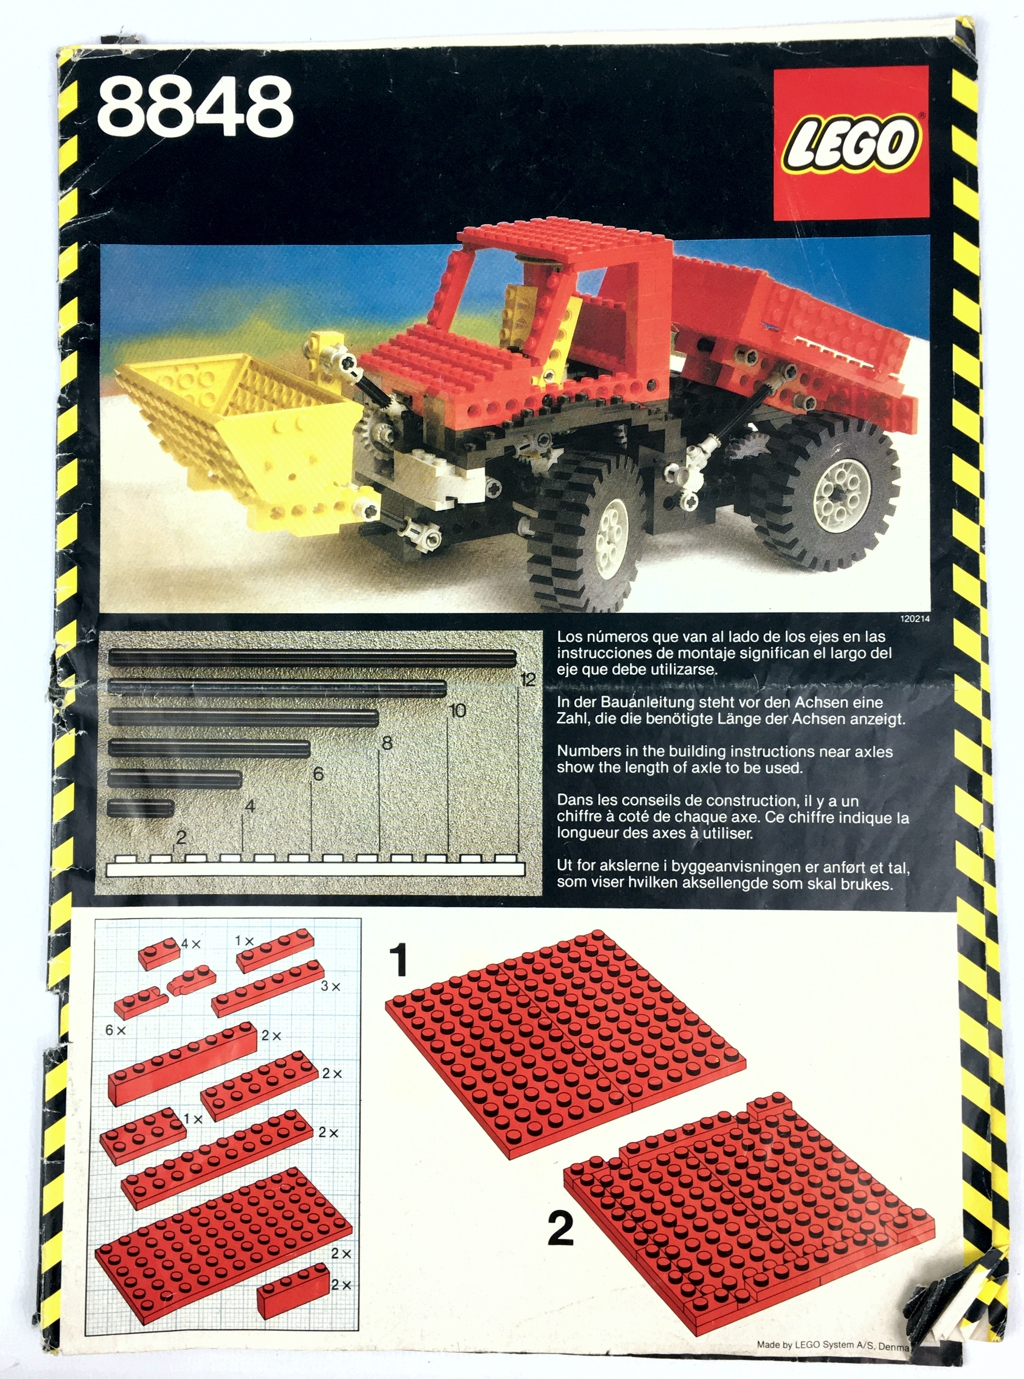 LEGO Technic 8848 Unimog aus dem Jahre 1981 im Classic Review zusammengebaut